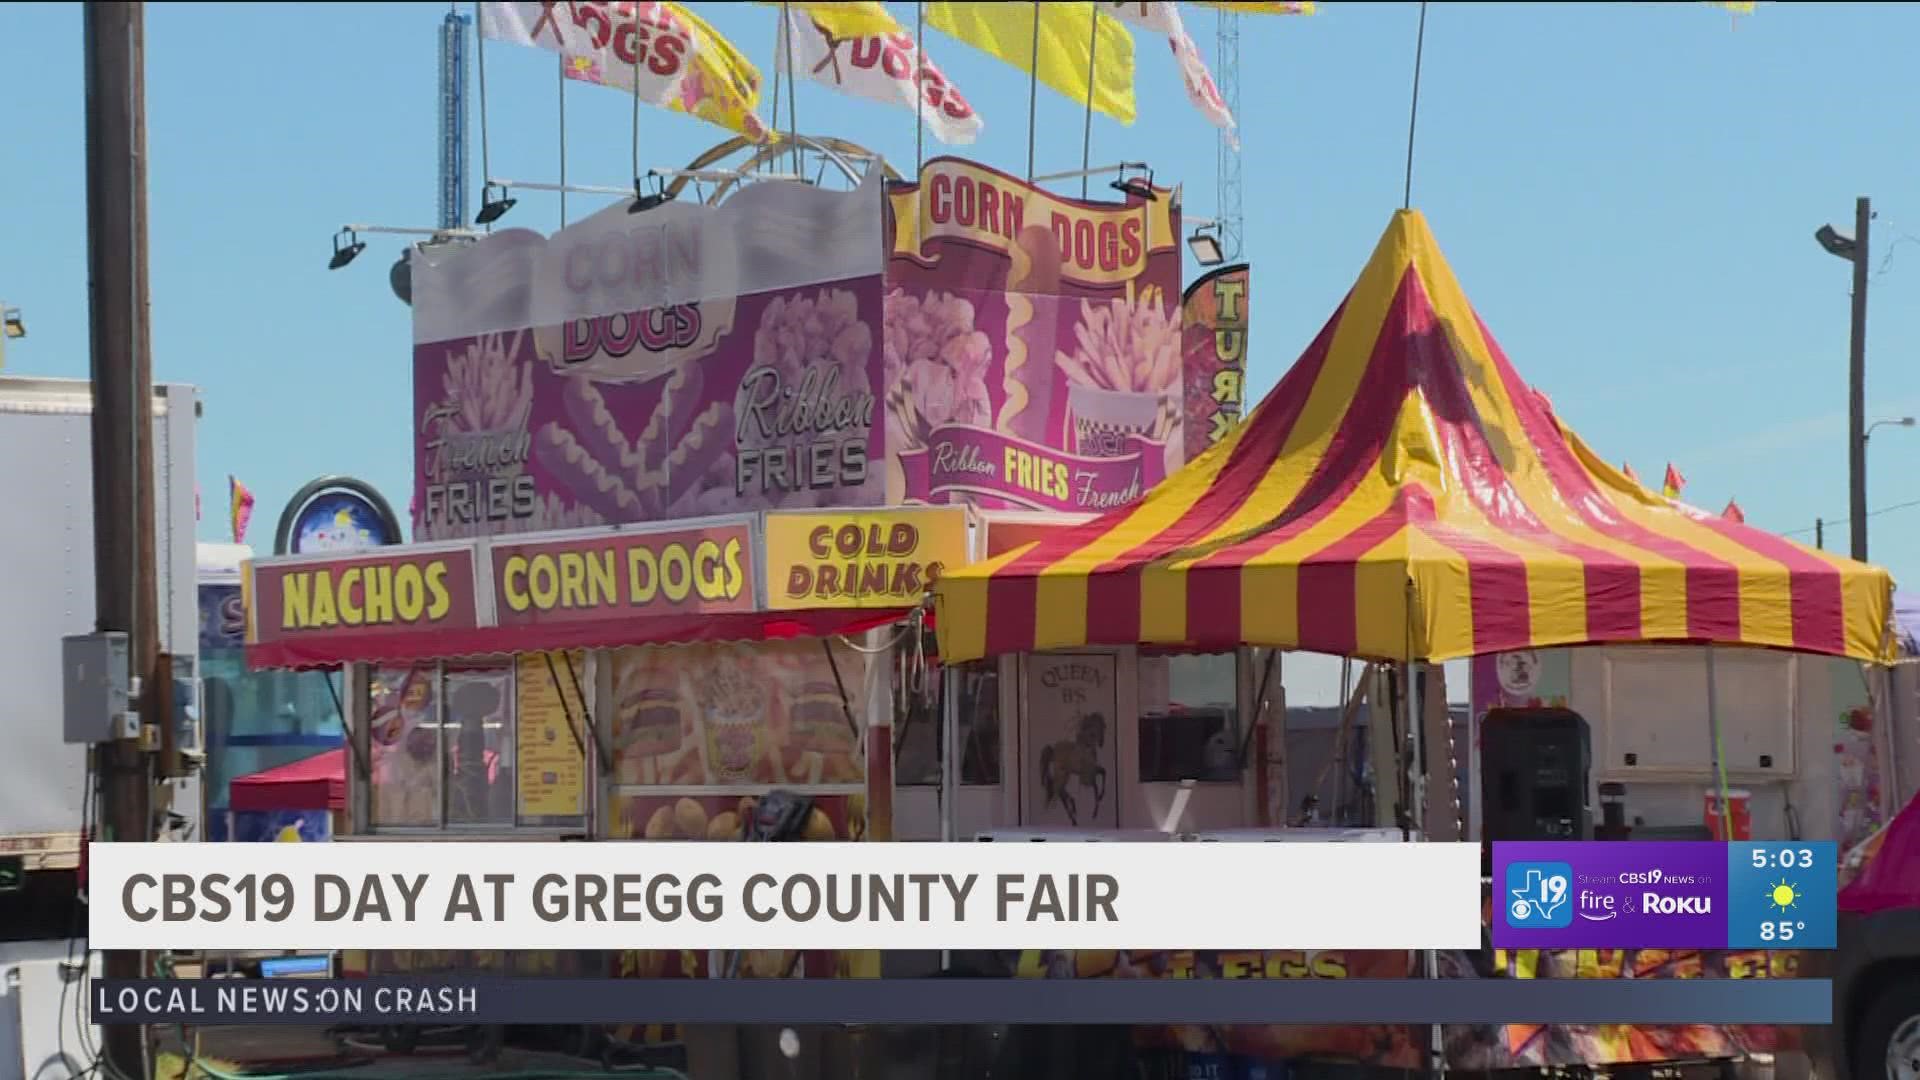 This is 73rd annual Gregg County Fair.